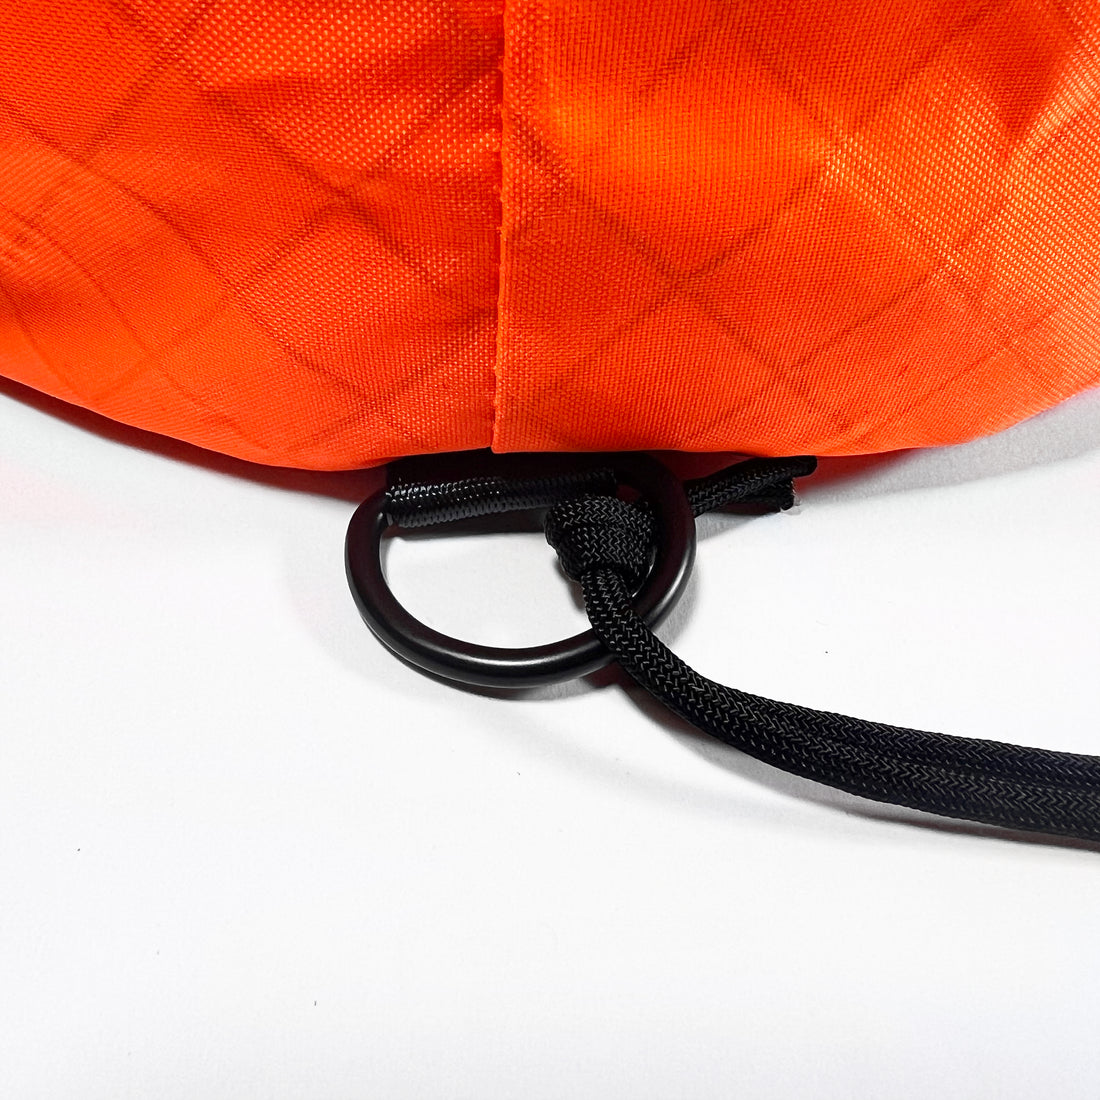 Bucket Bag | 'Fire Edition' ECOPAK™ EPX Blaze Orange